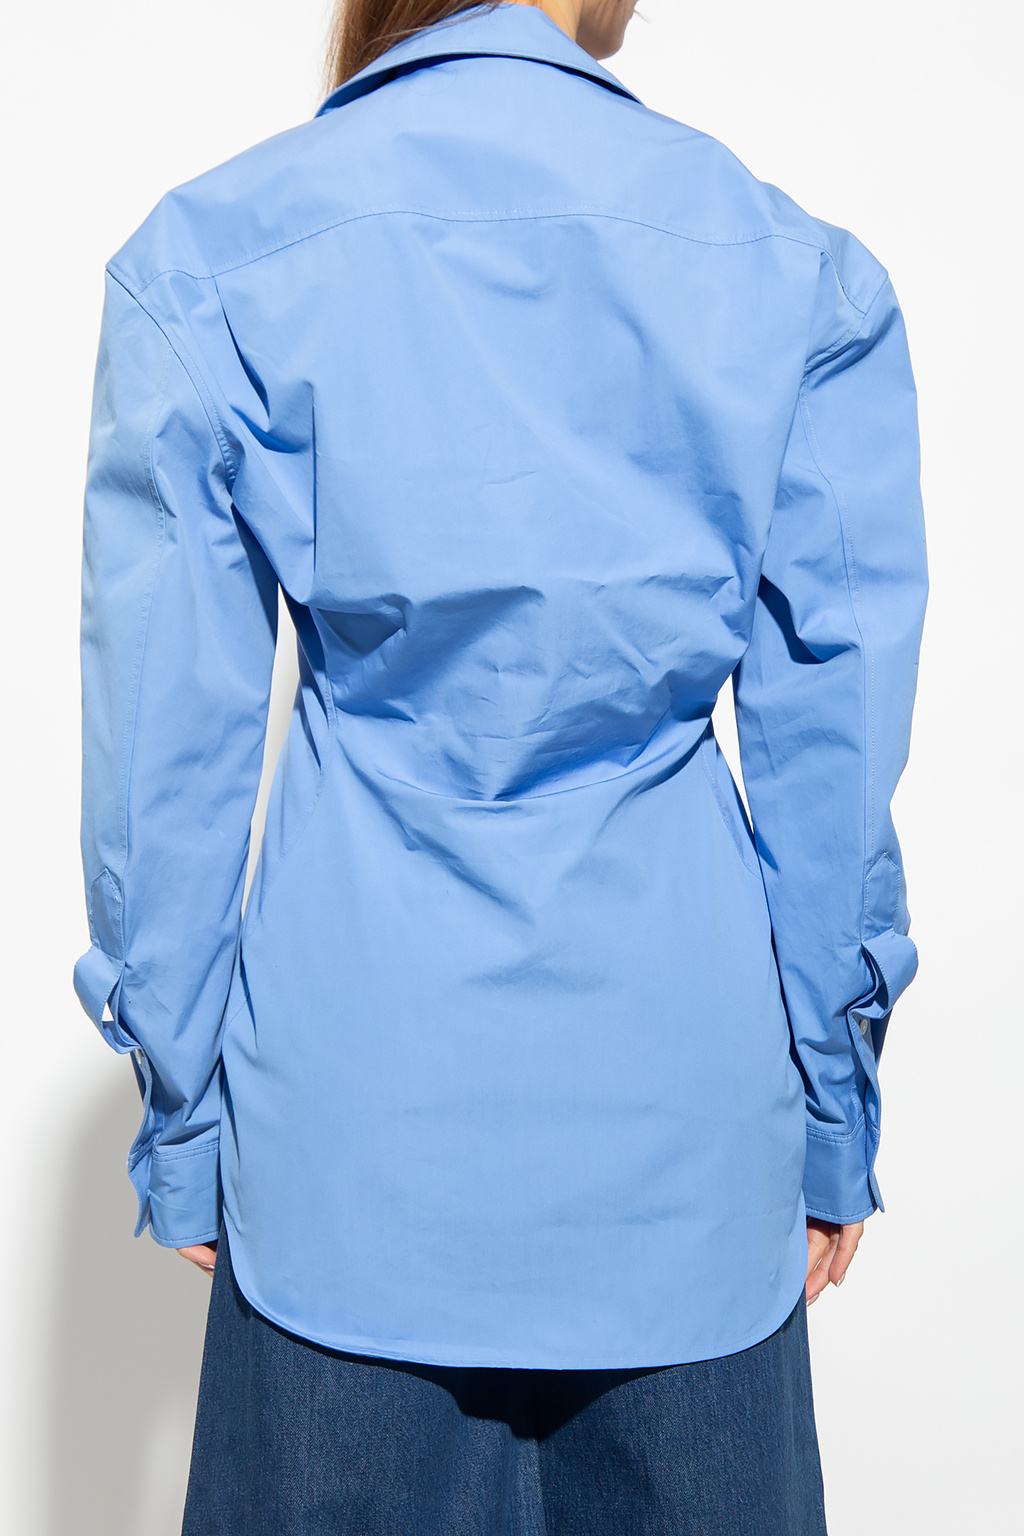 Alexander Wang Comfy cashmere hoodie